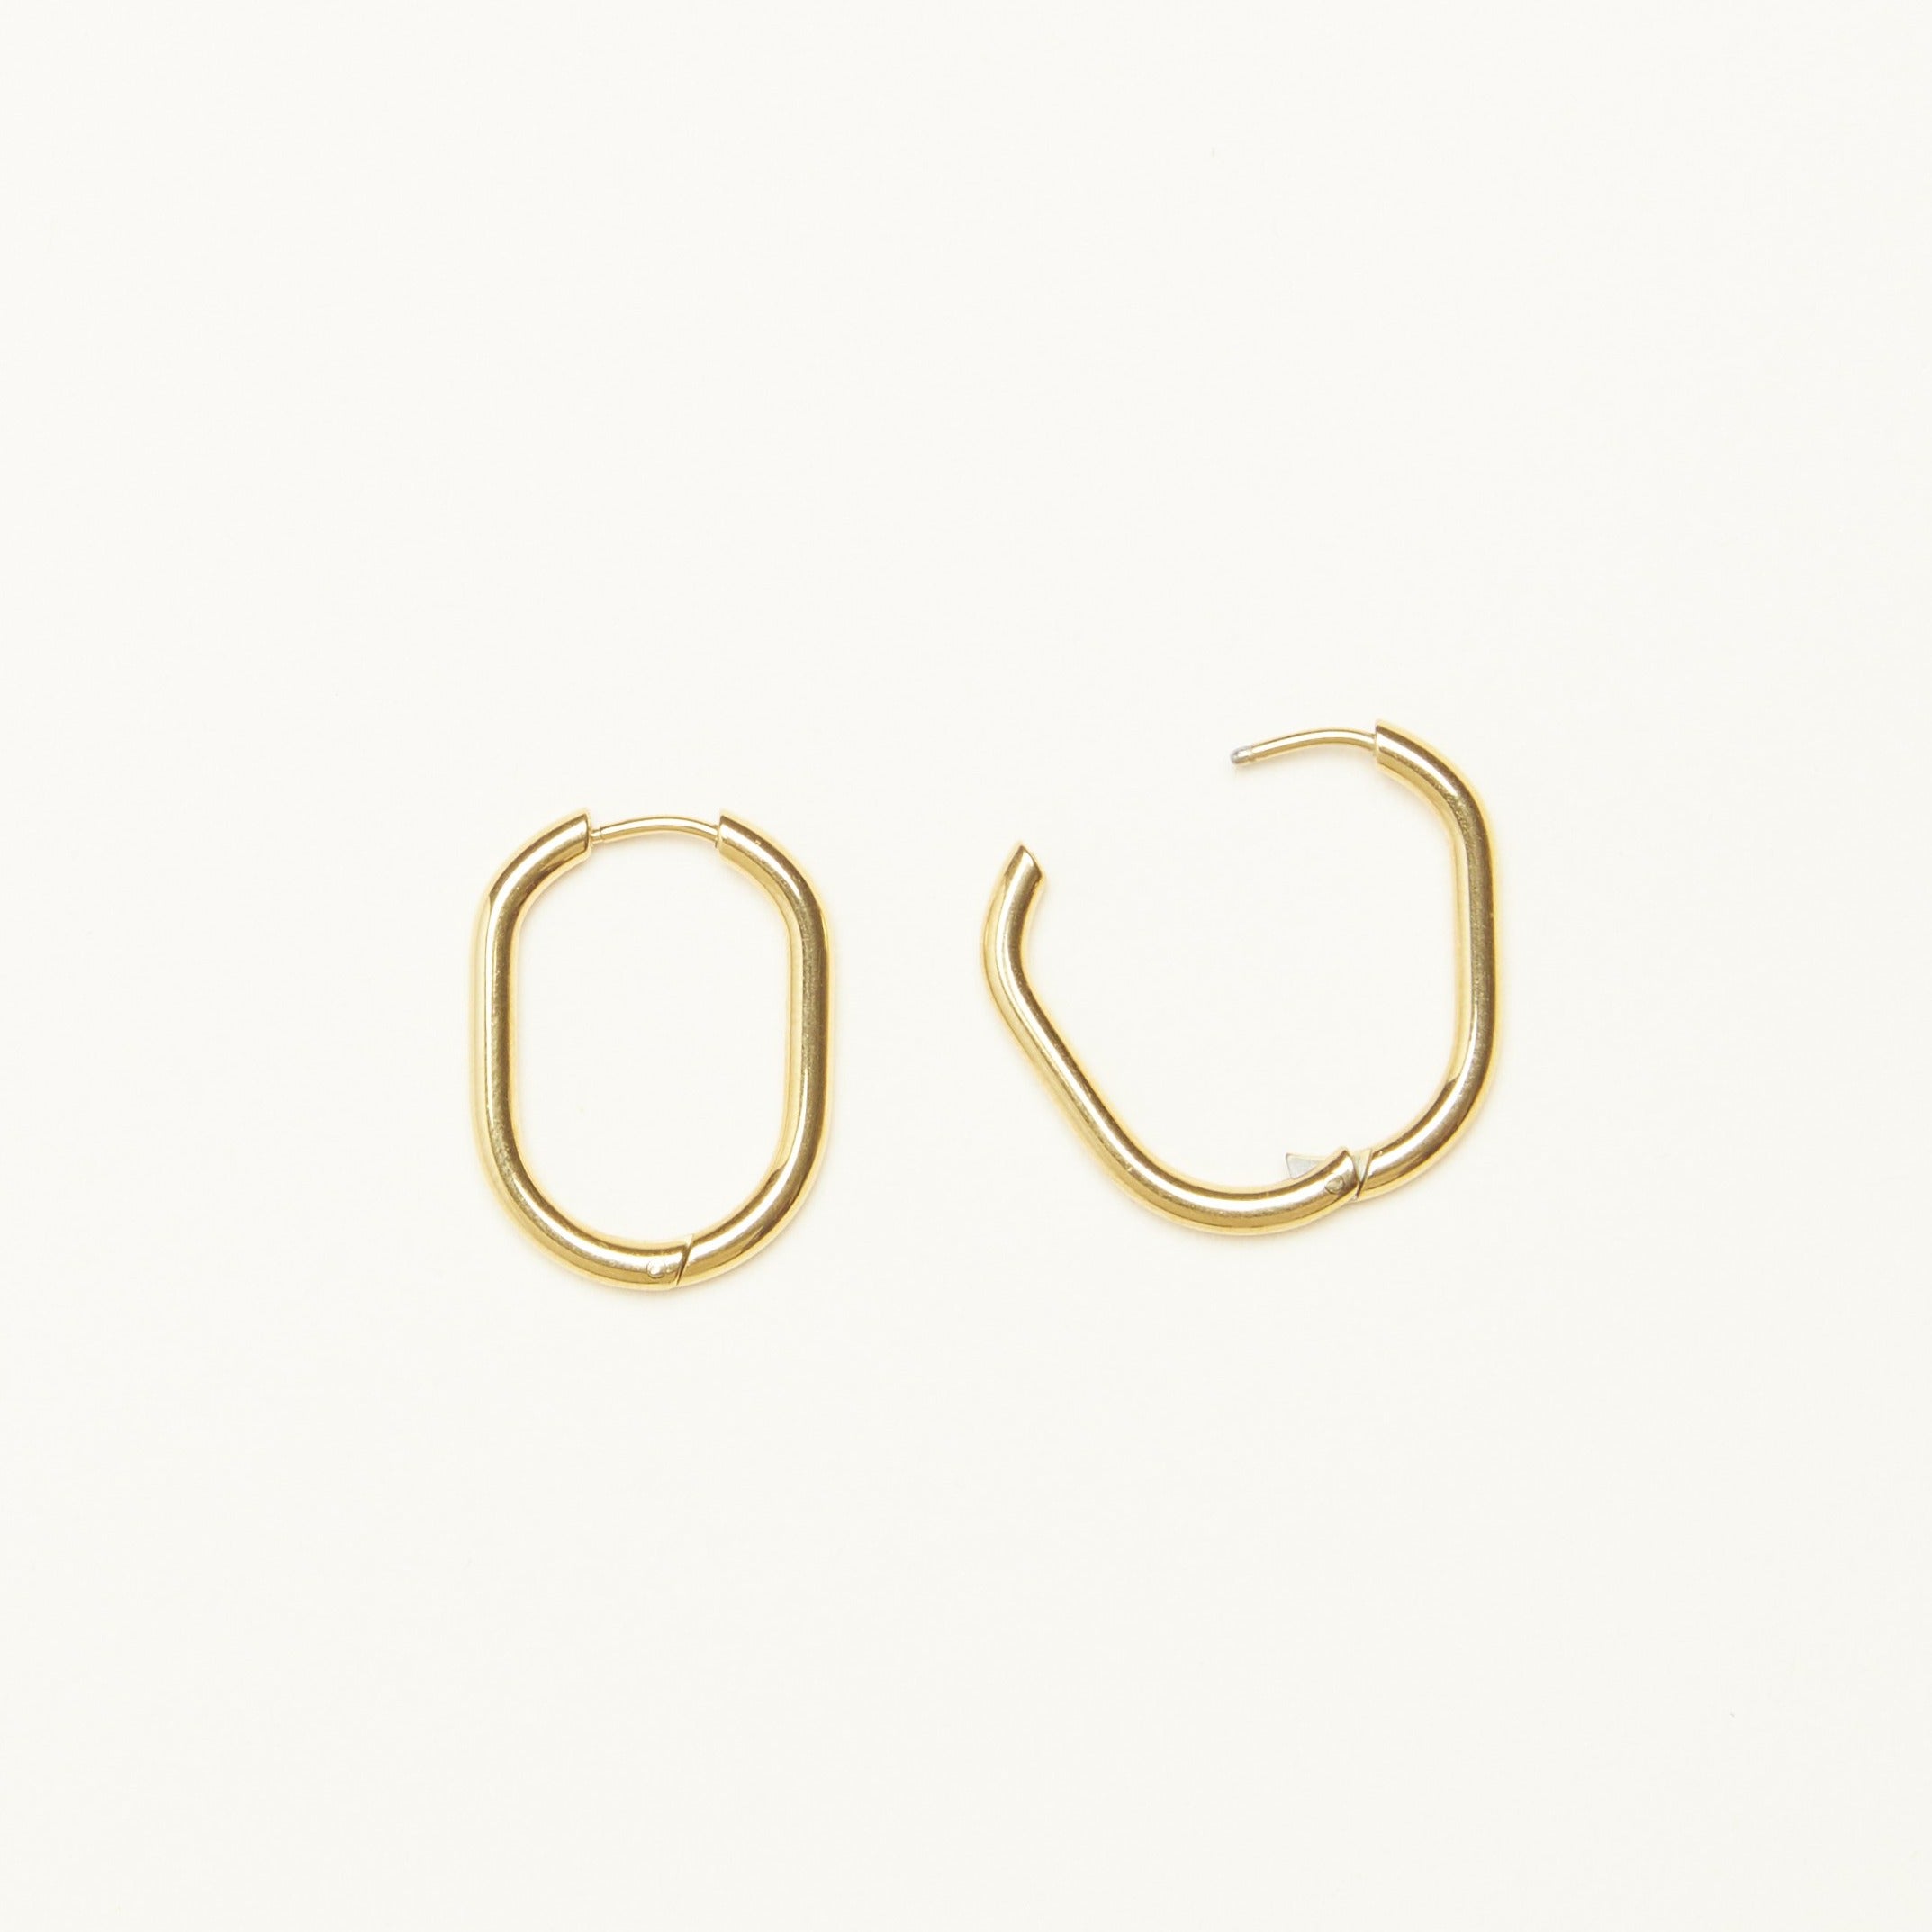 French Thin Hoop Earrings